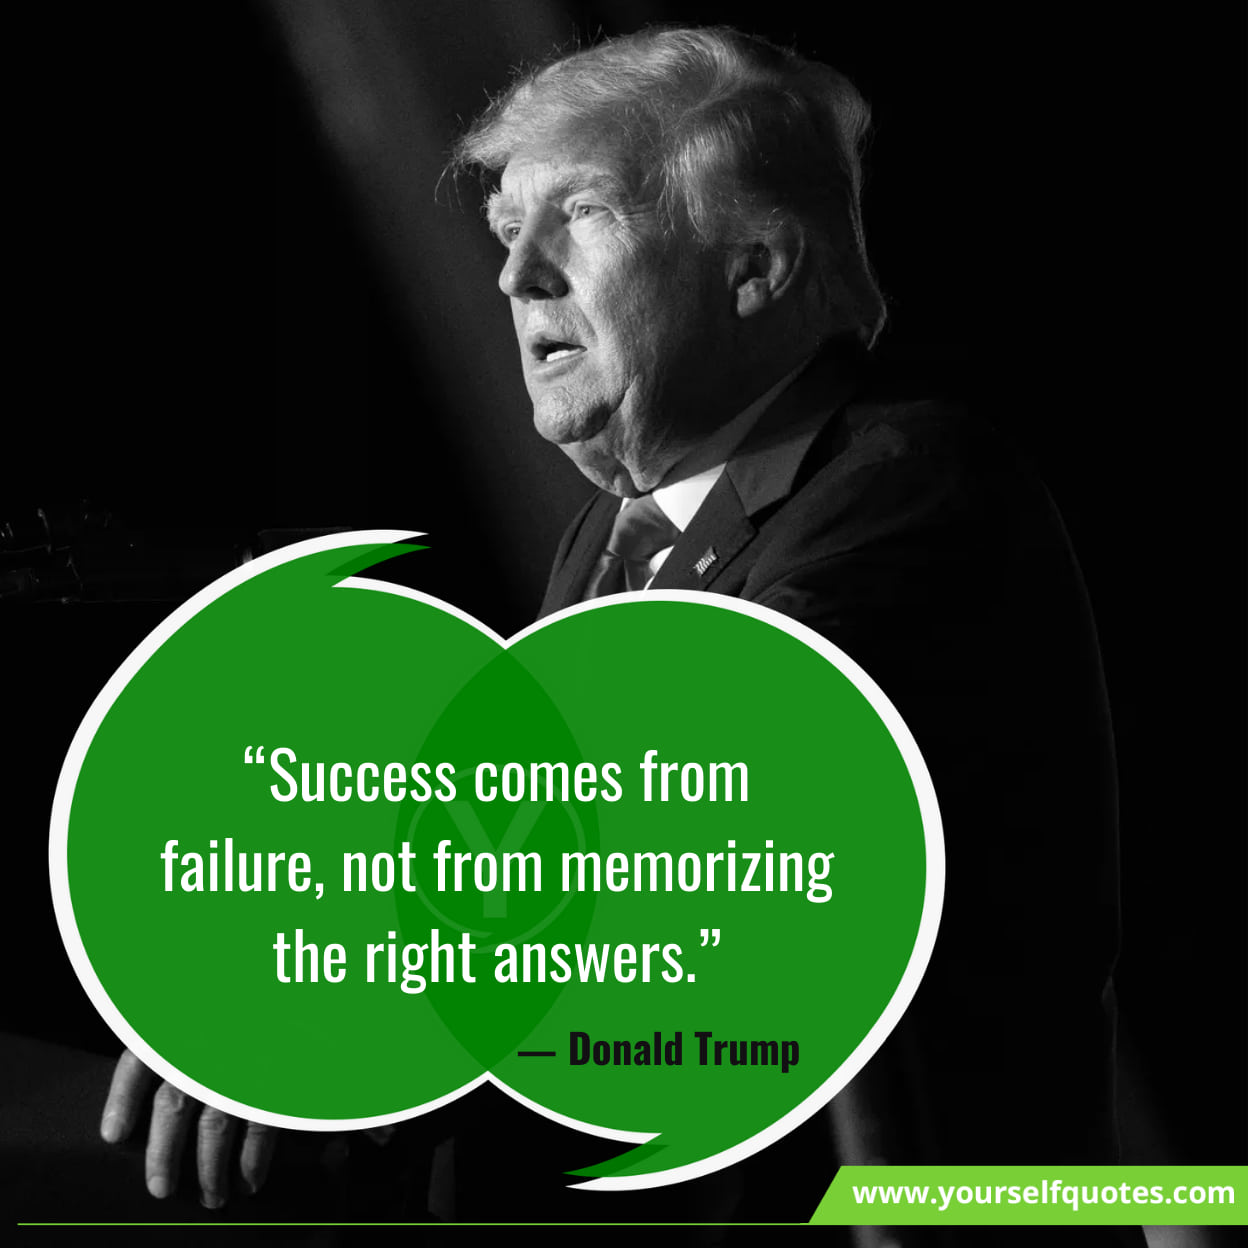 Donald Trump Quotes On Success